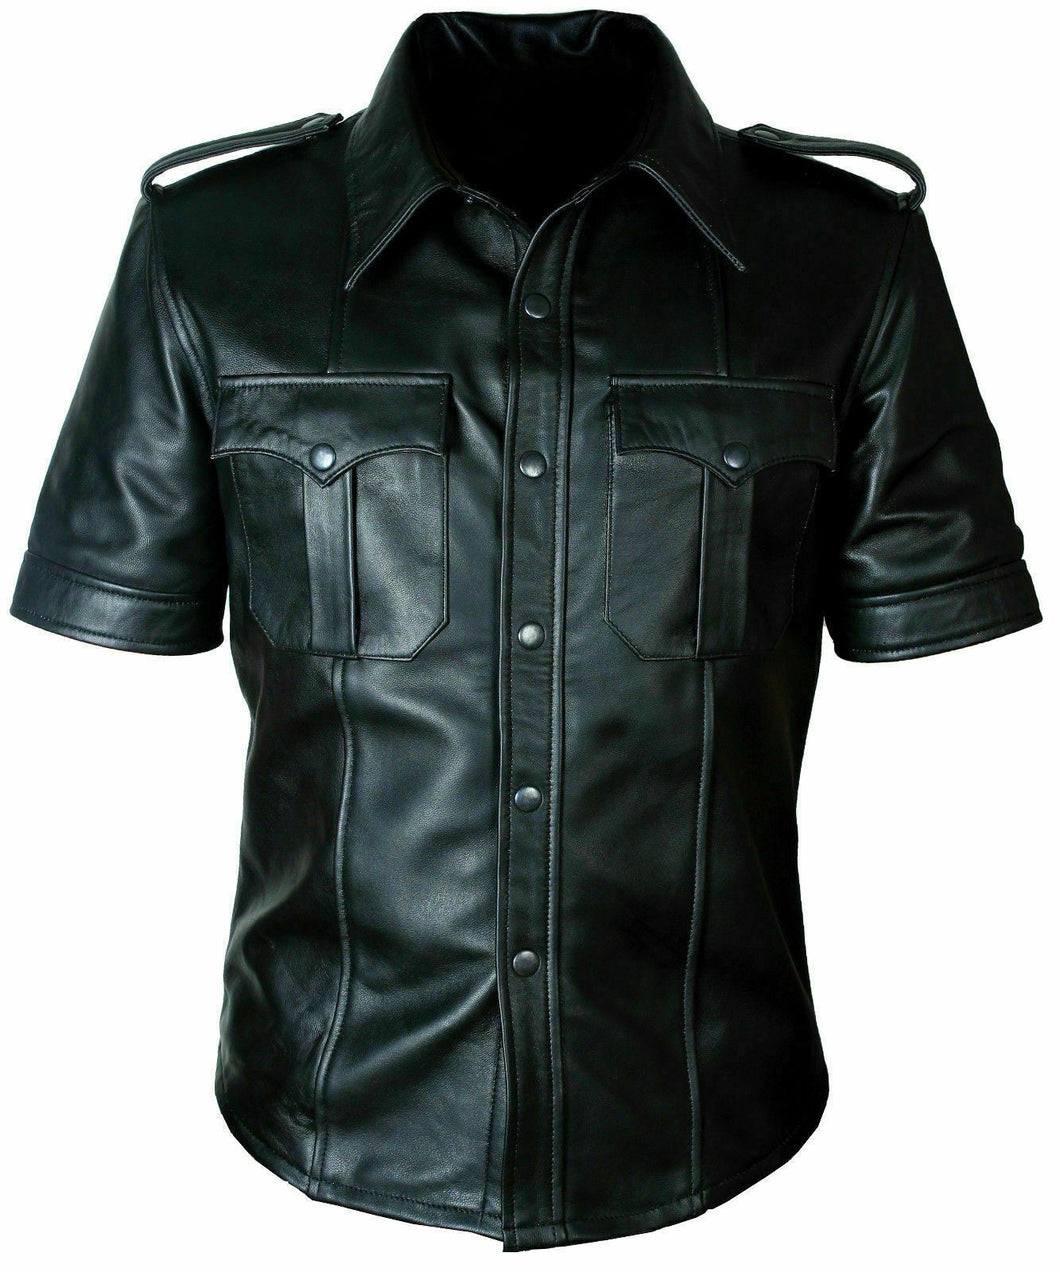 Men's Black Real Leather Short Sleeve Shirt